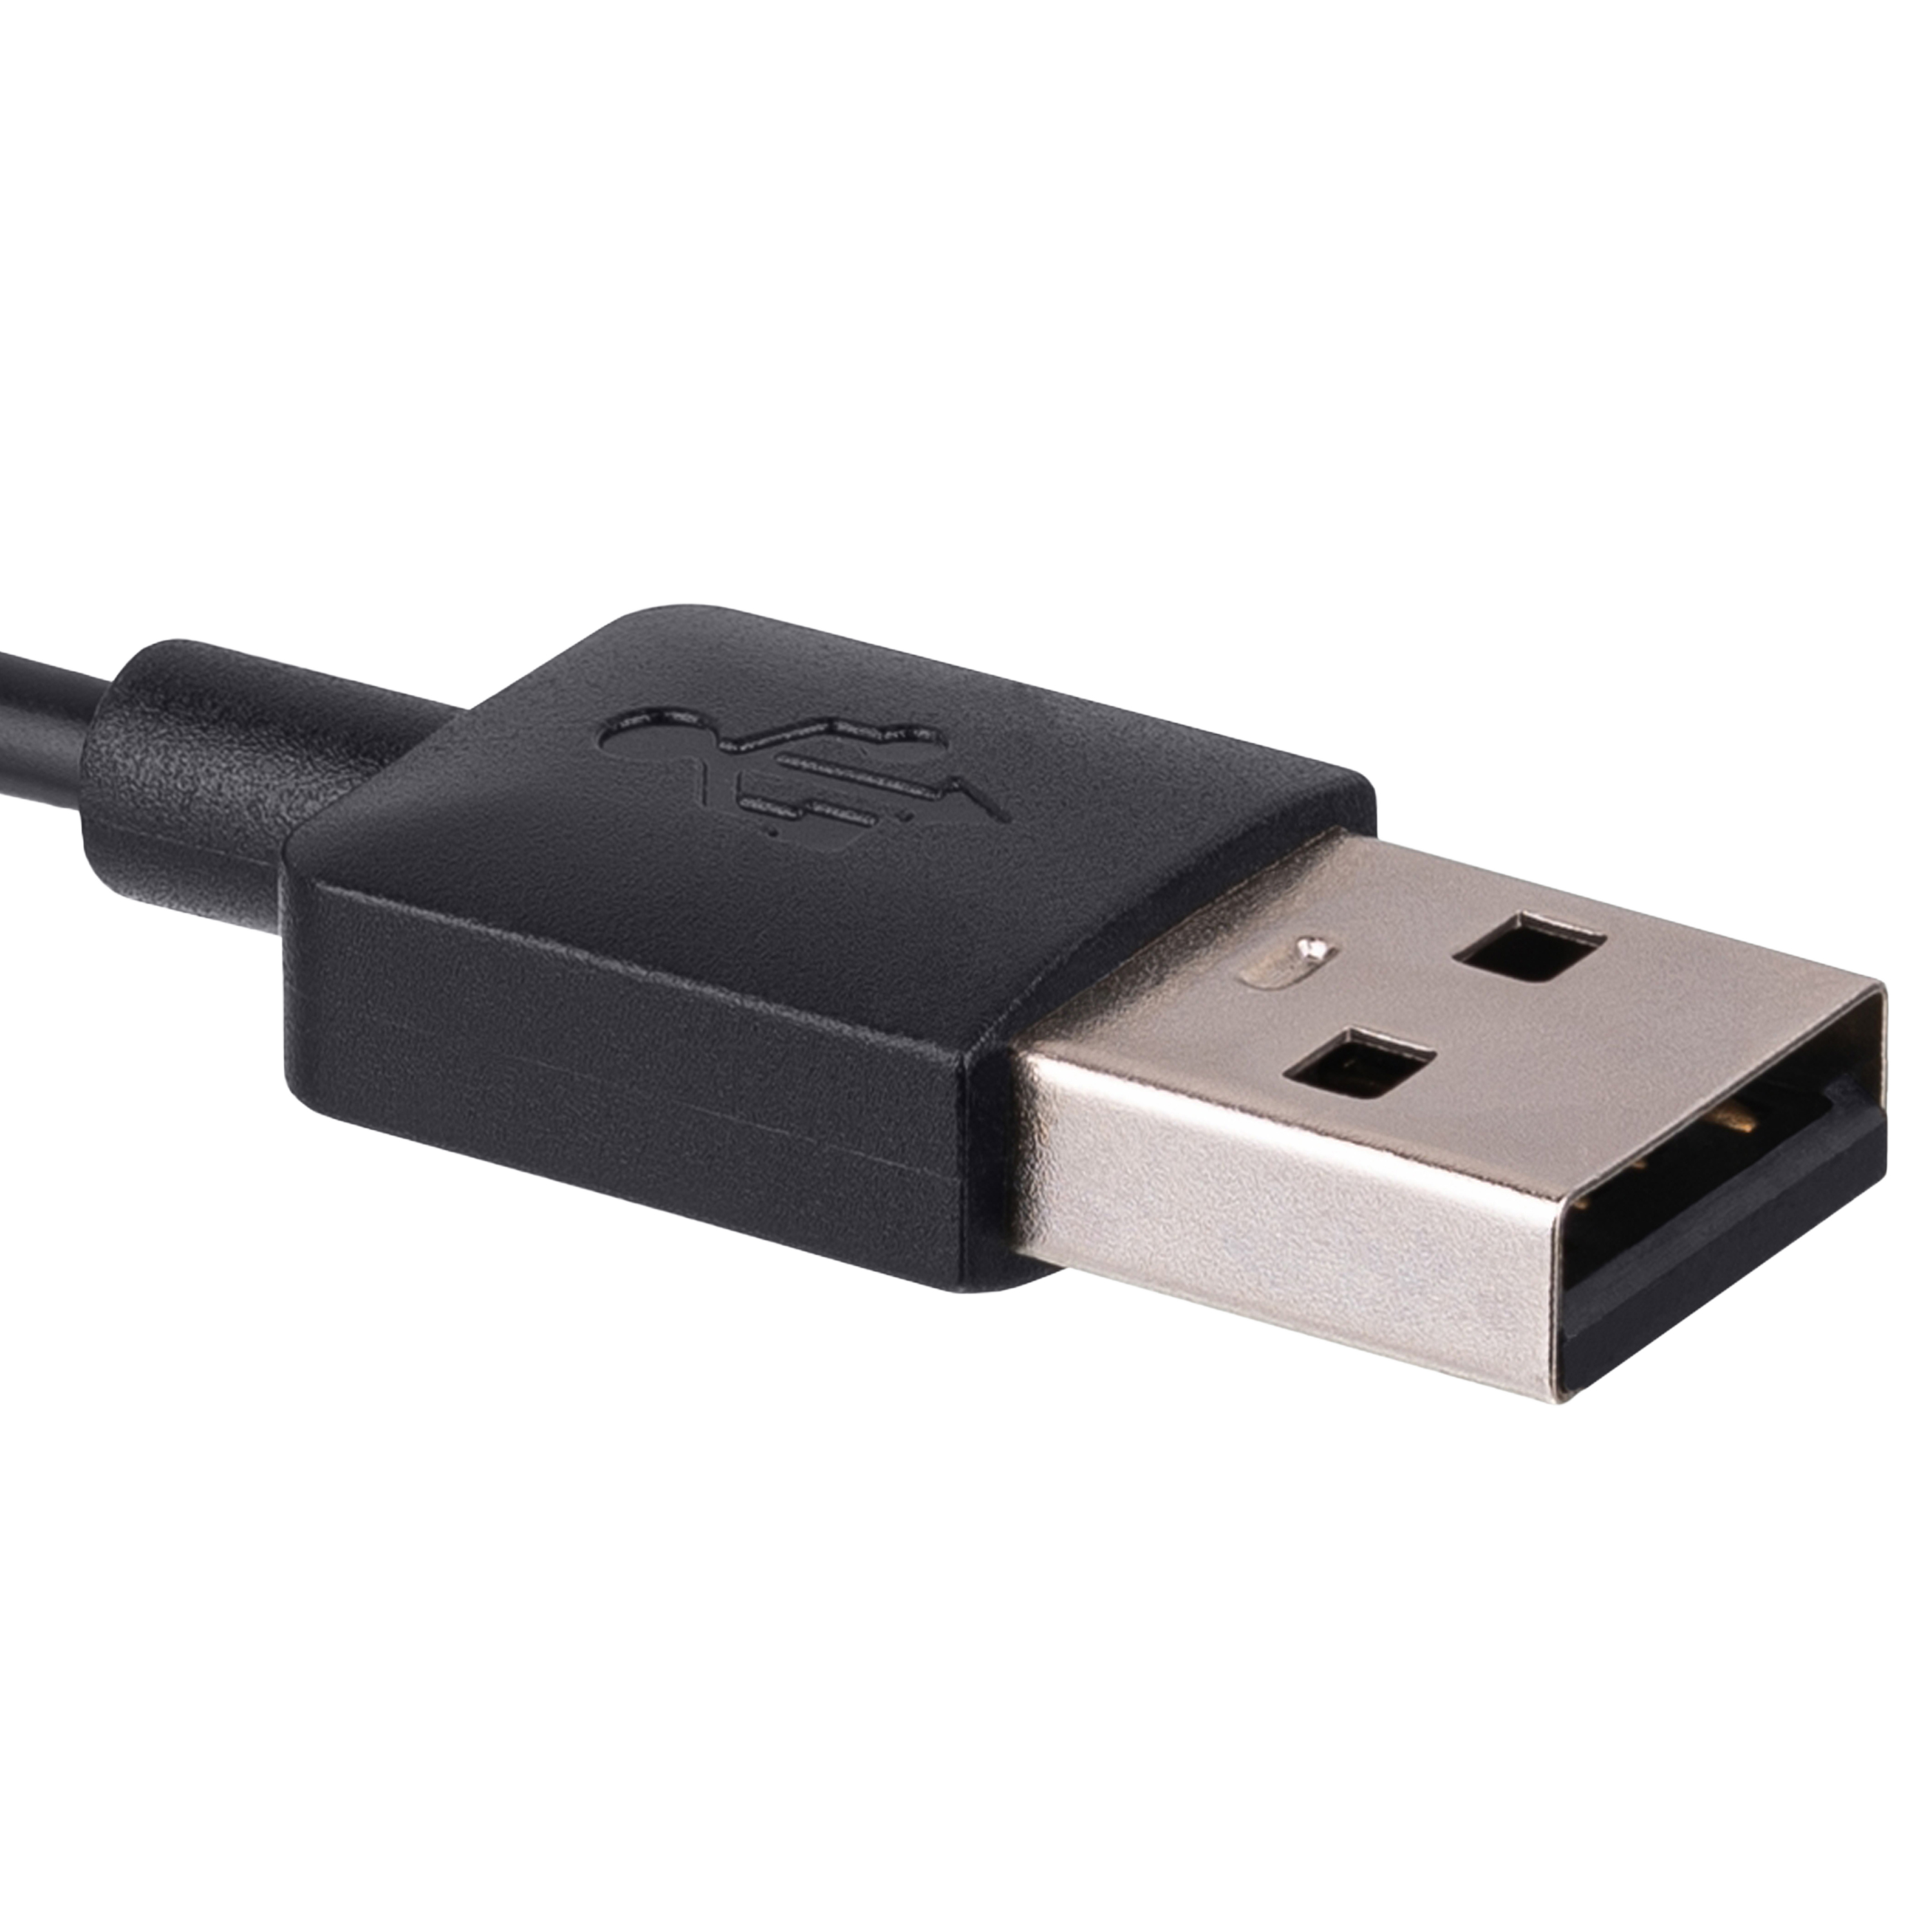 USB charger charging cable cord for fenix 5/5S/5X vivoactive 3 vivosport  PDHZJP 